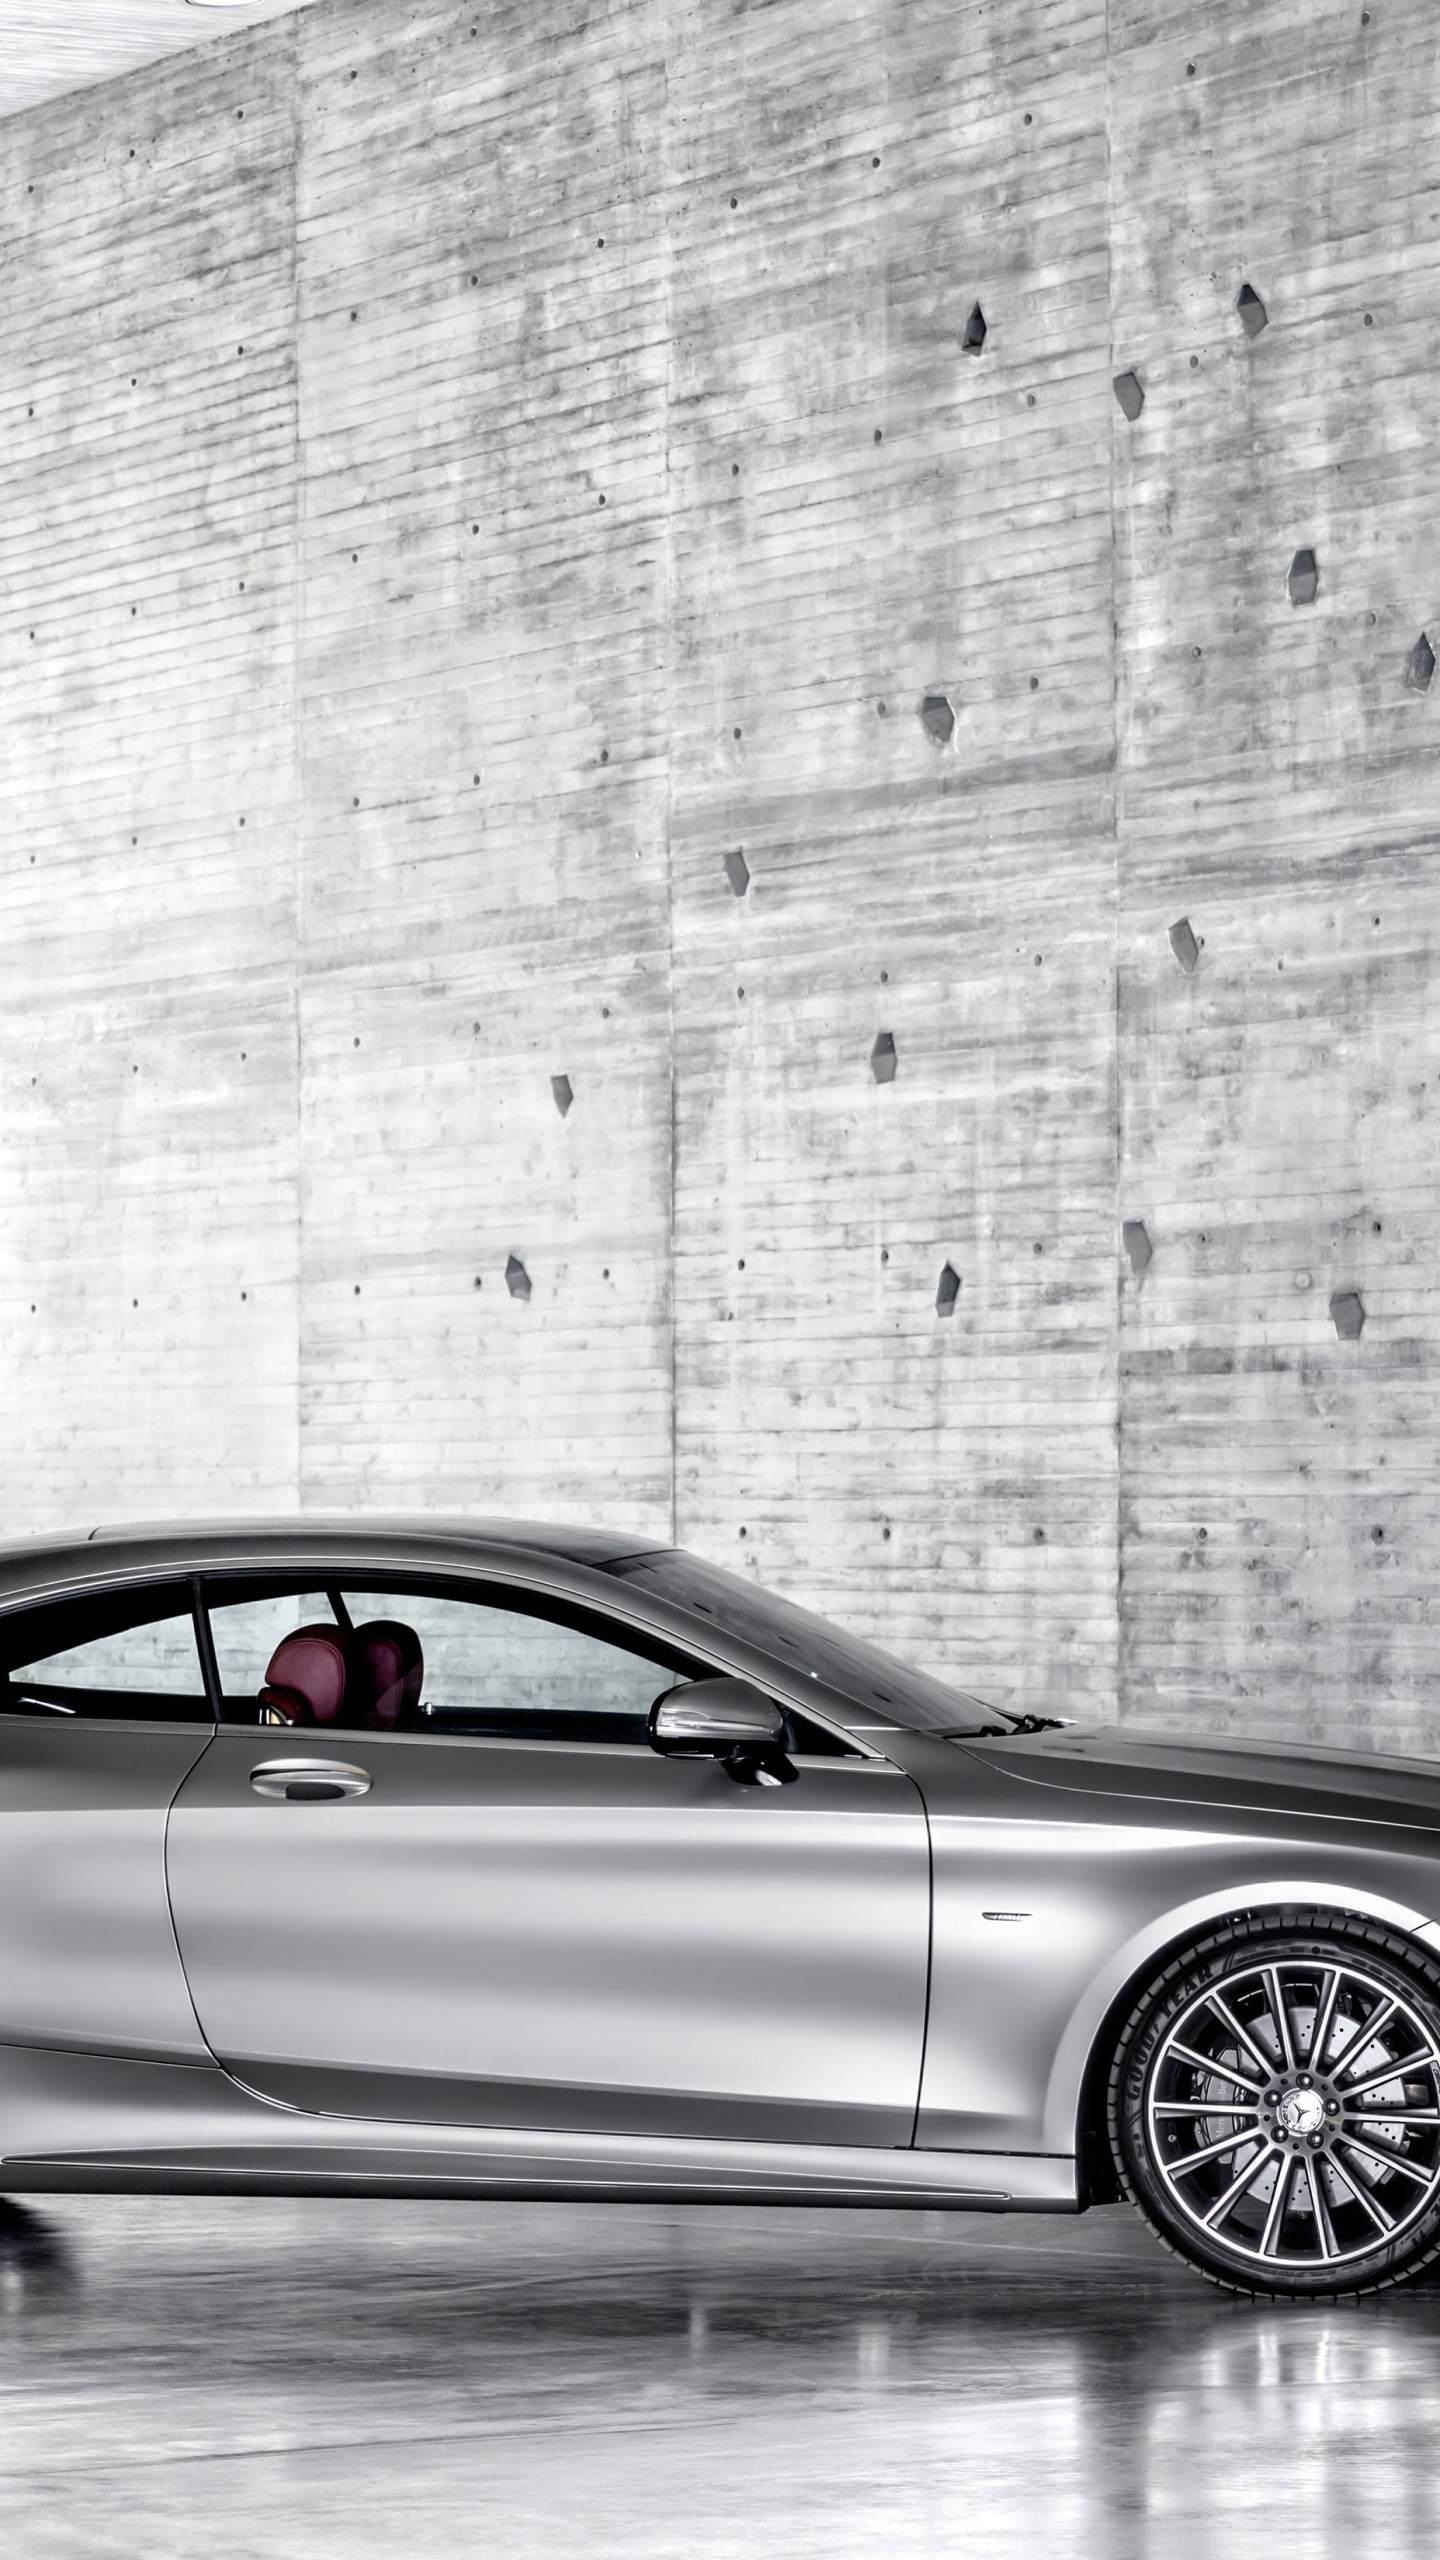 2015 Mercedes-Benz S-Class Coupe Wallpaper for Google Nexus 6P